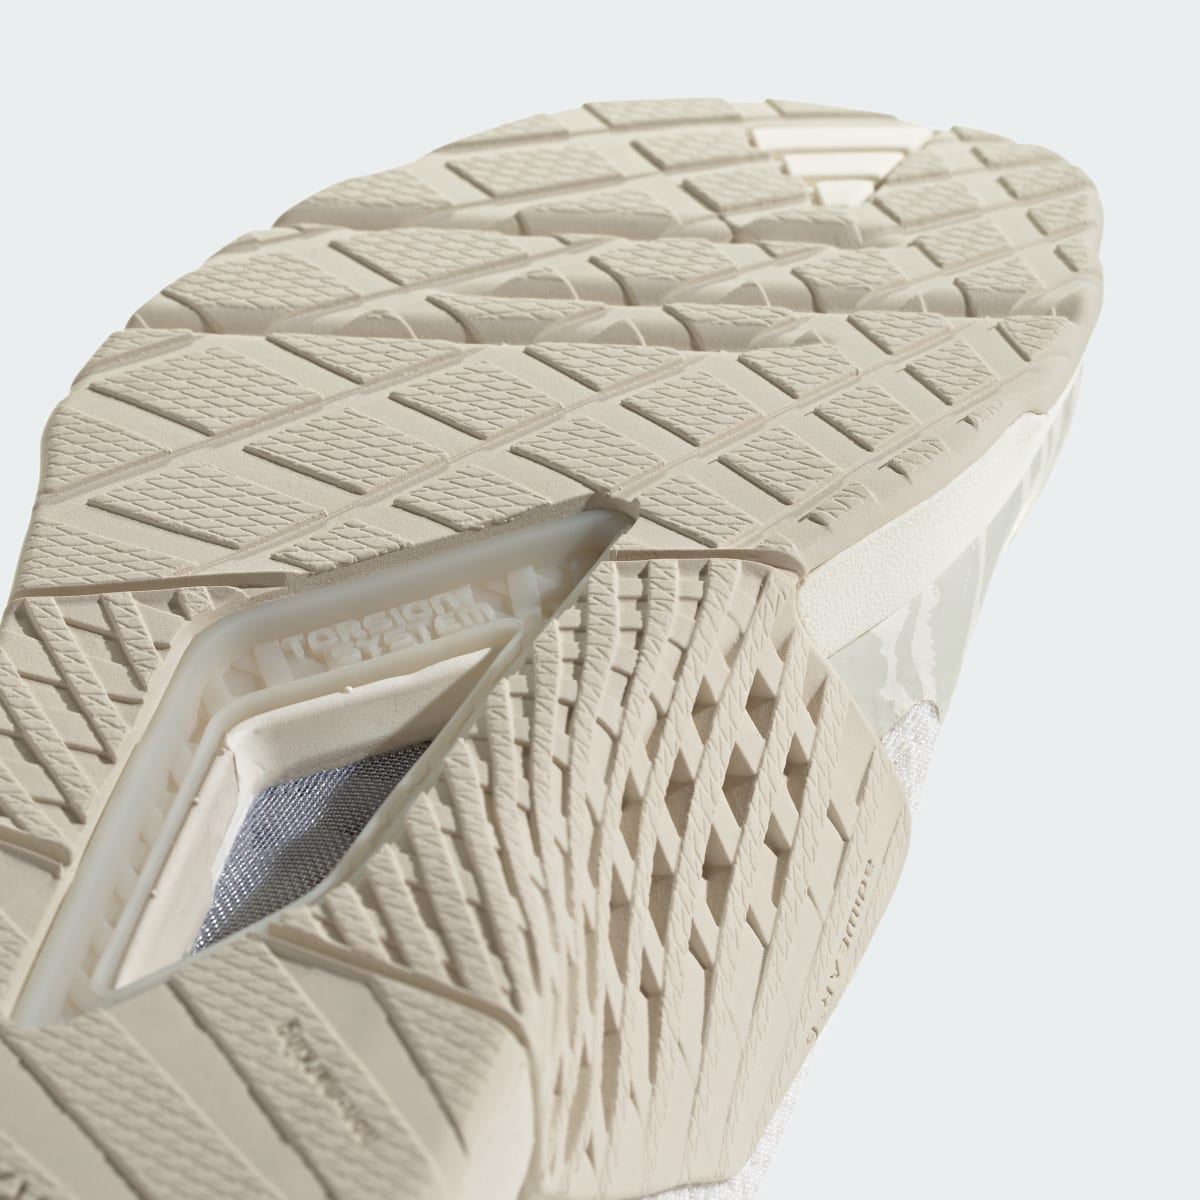 Adidas Scarpe Dropset 2. 12